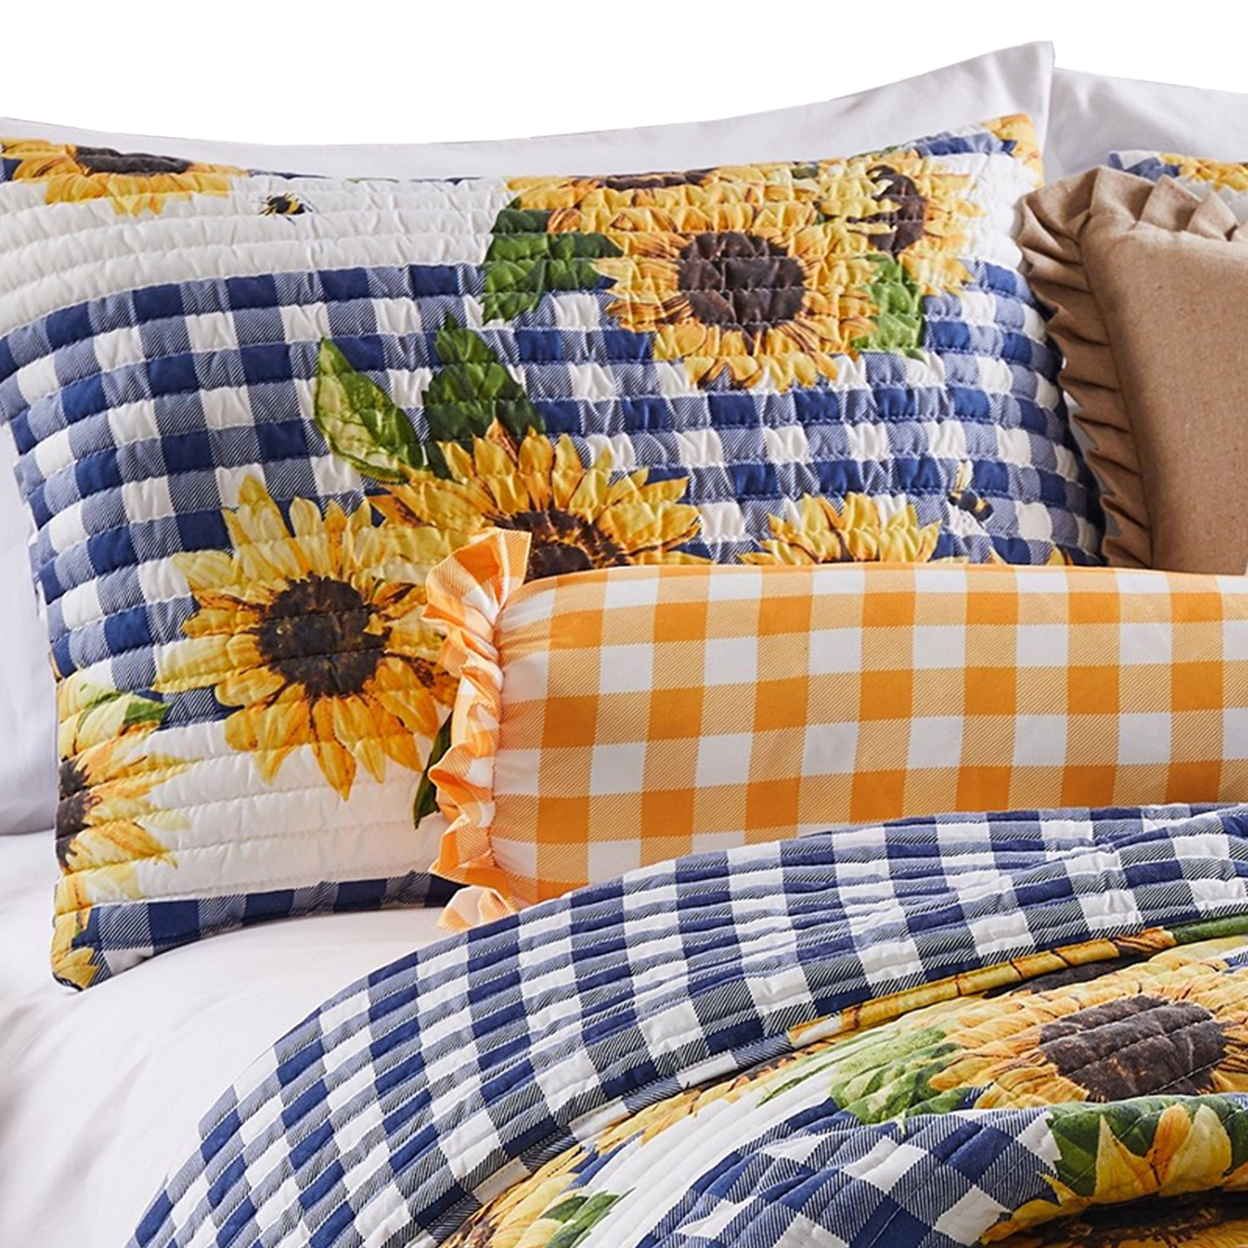 3 Piece Full Queen Quilt Set With Sunflower Print, Yellow- Saltoro Sherpi